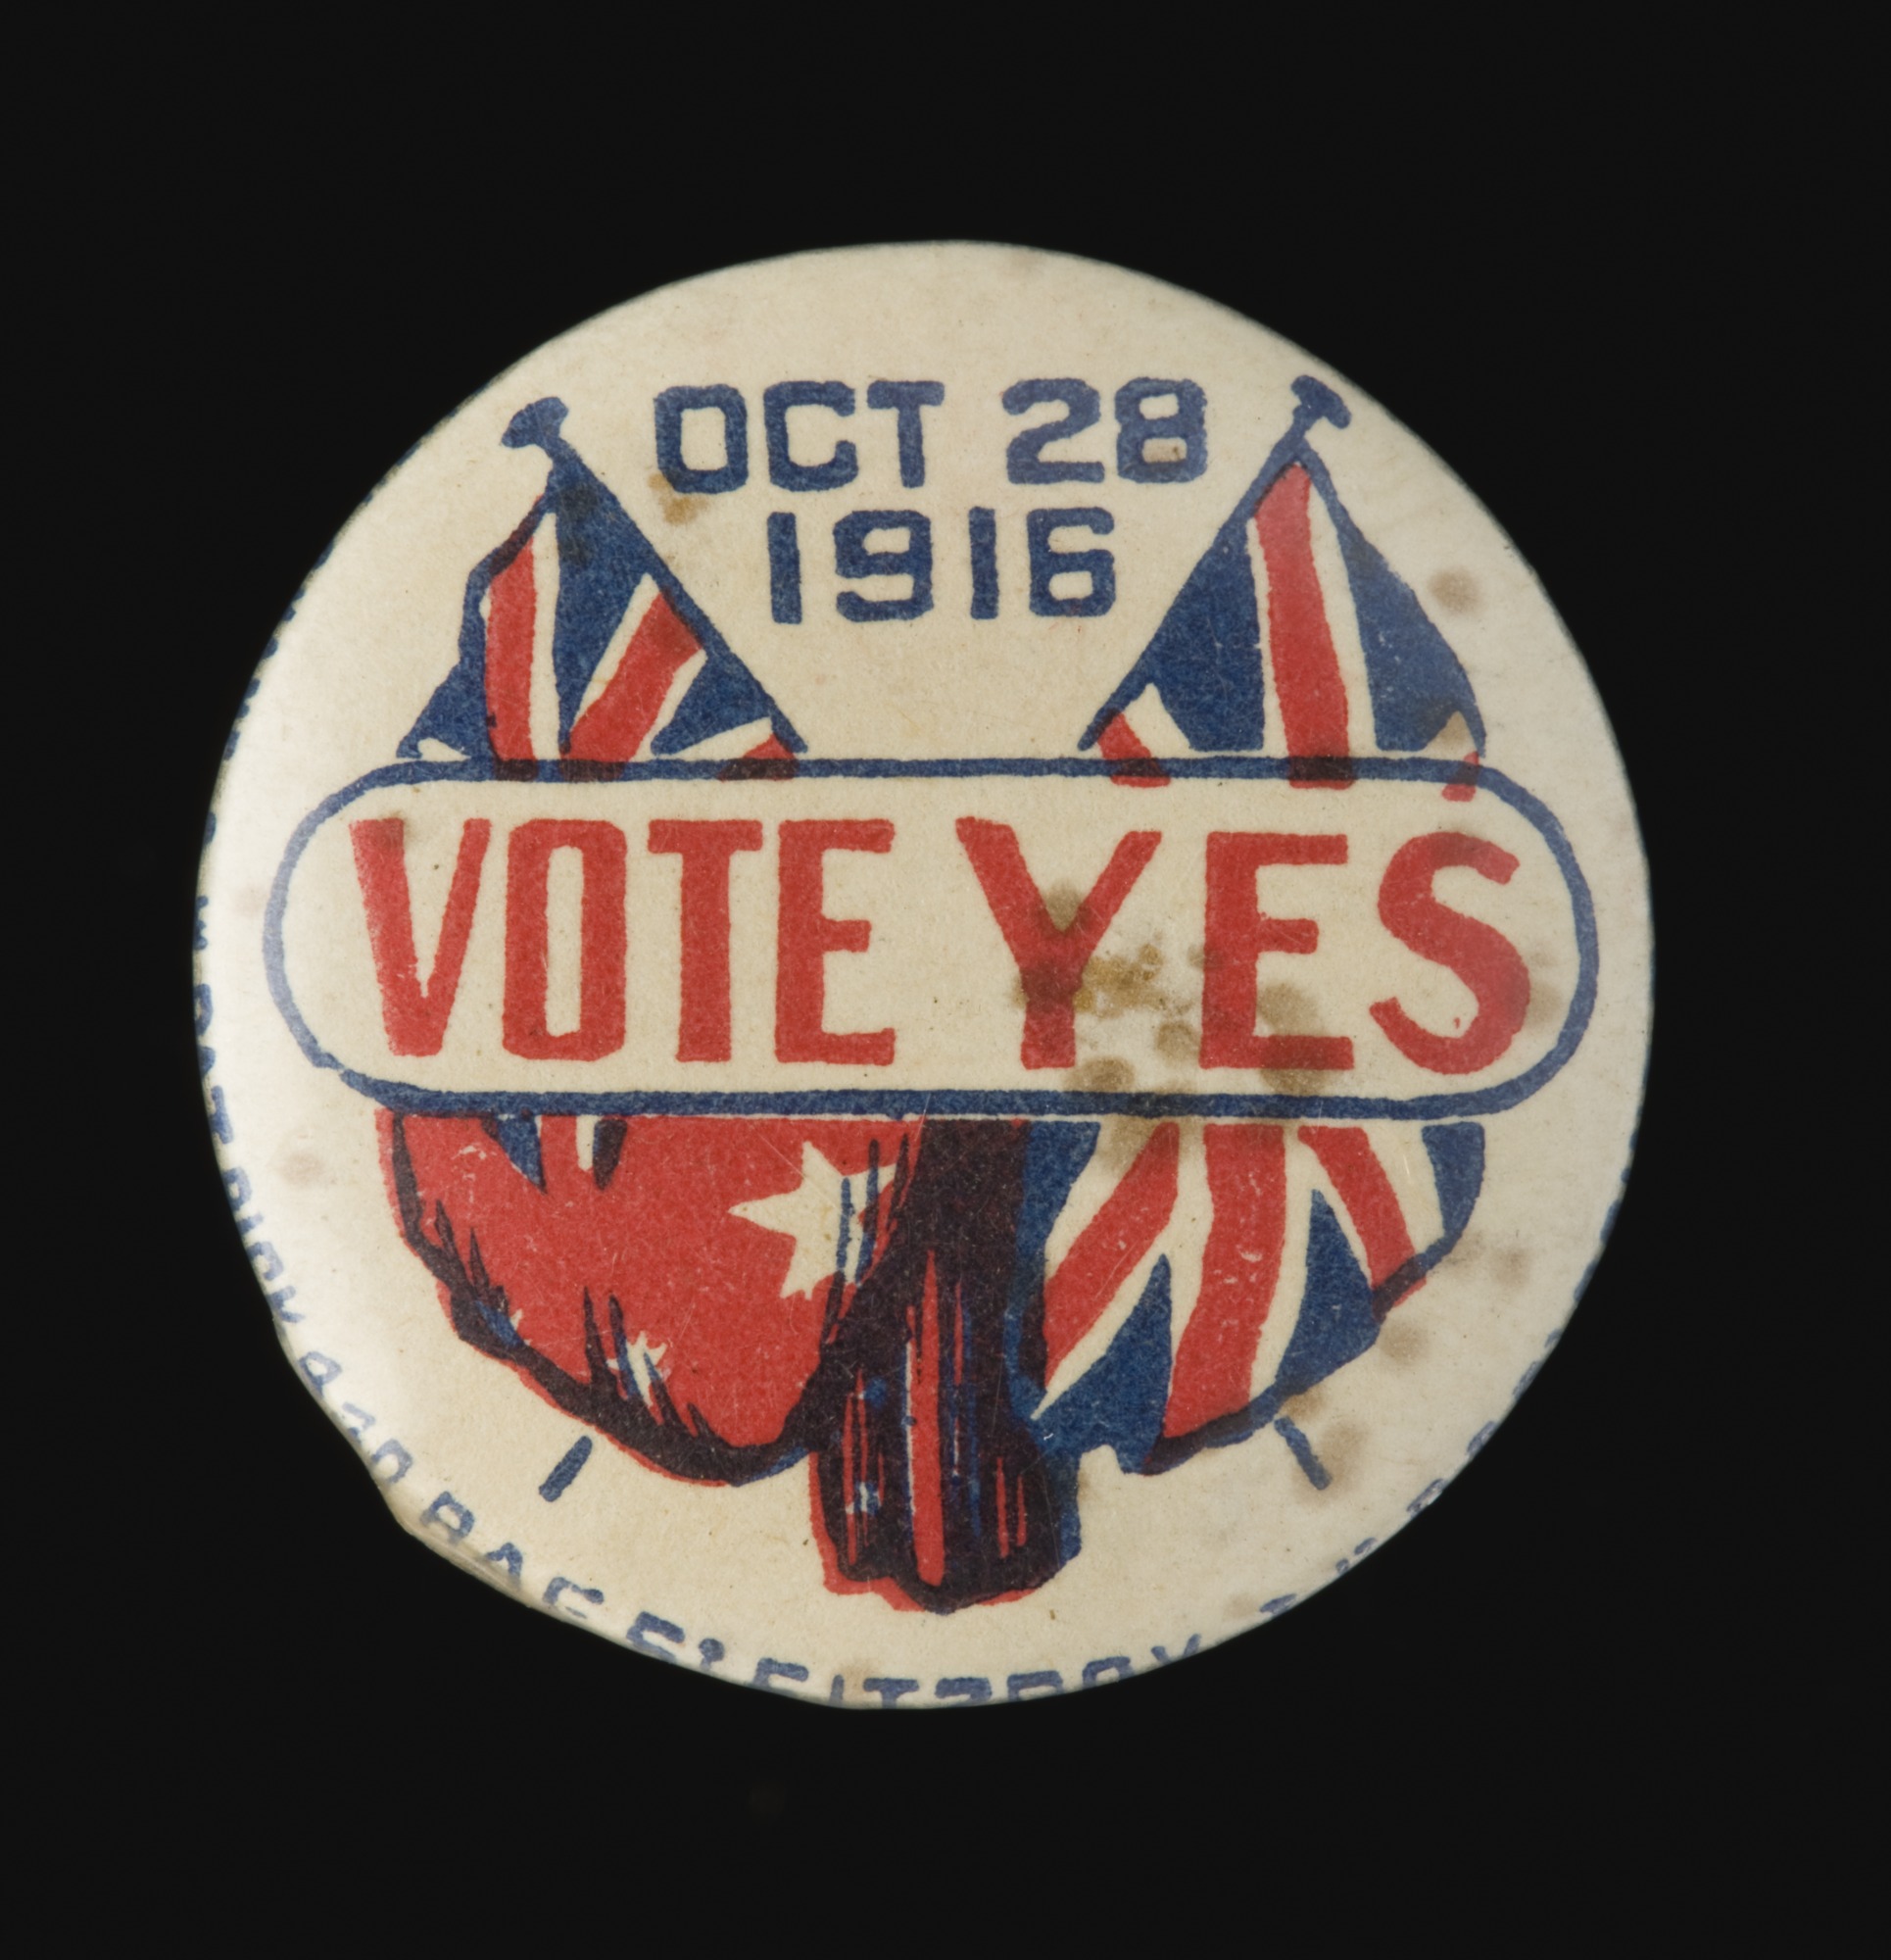 A pro-conscription badge from the 1916 conscription referendum.